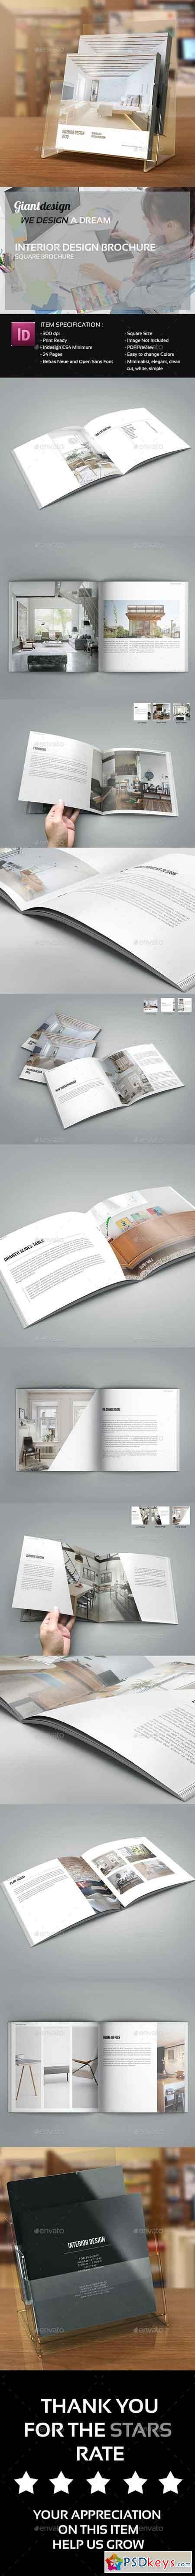 Interior Design - Square Brochure Catalog 13686993